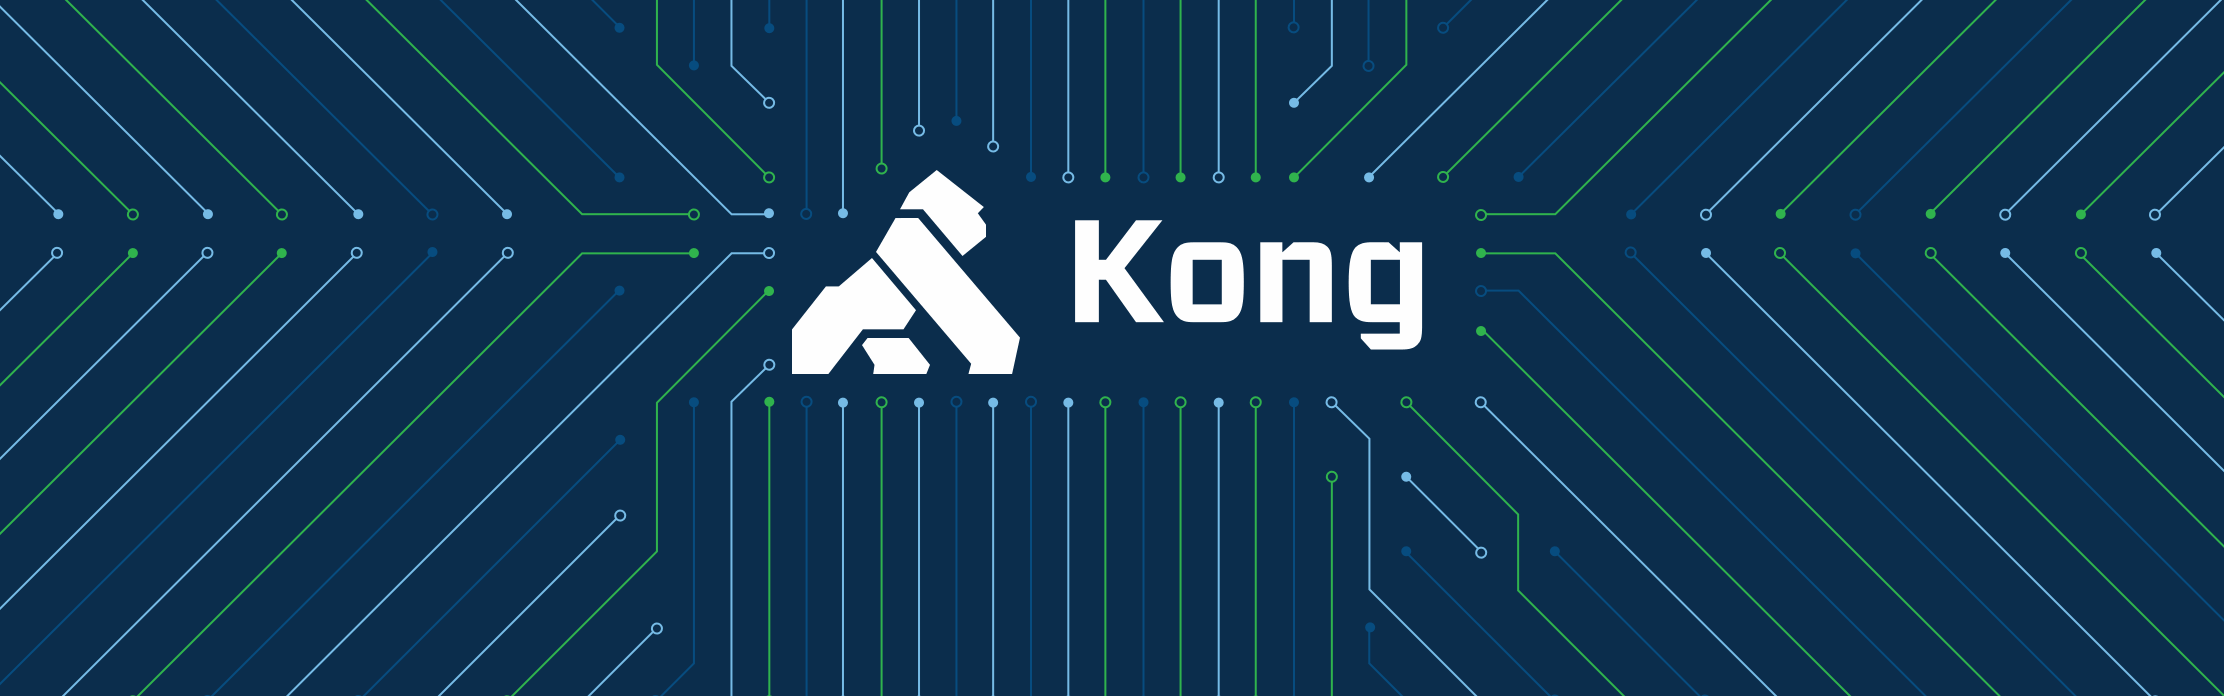 Welcome Kong Inc. | Introducing Kong Enterprise Edition